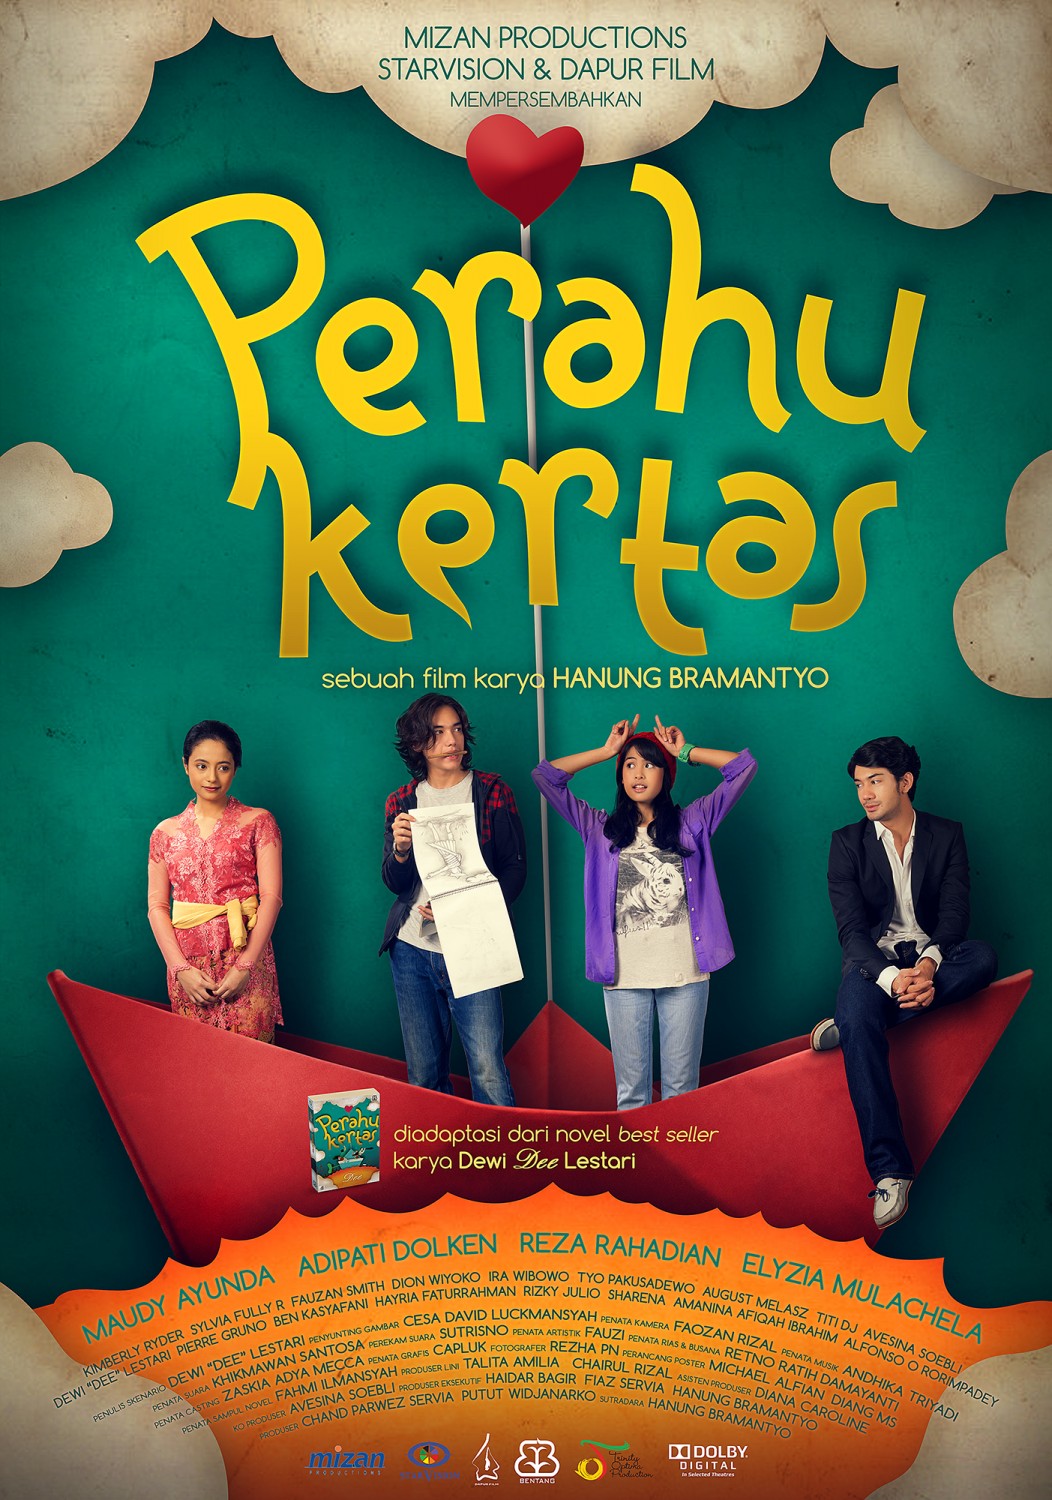 Extra Large Movie Poster Image for Perahu kertas 